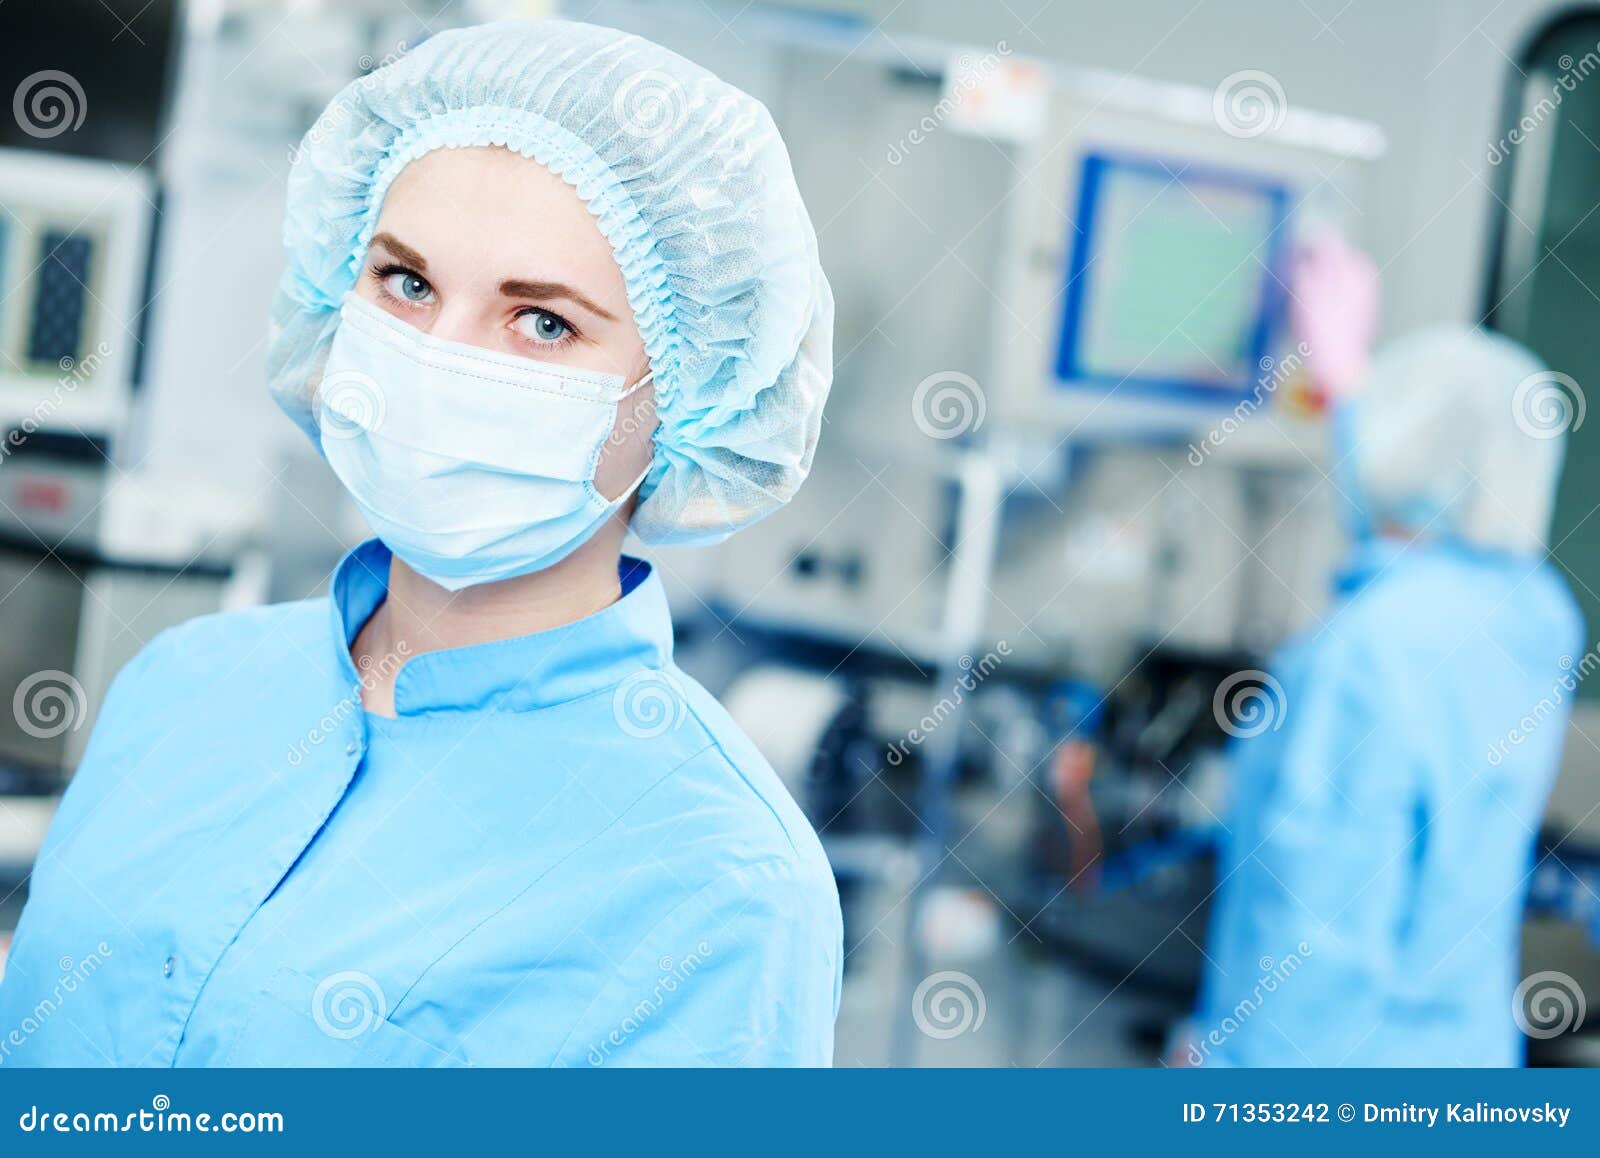 pharmaceutics. worker operator portrait